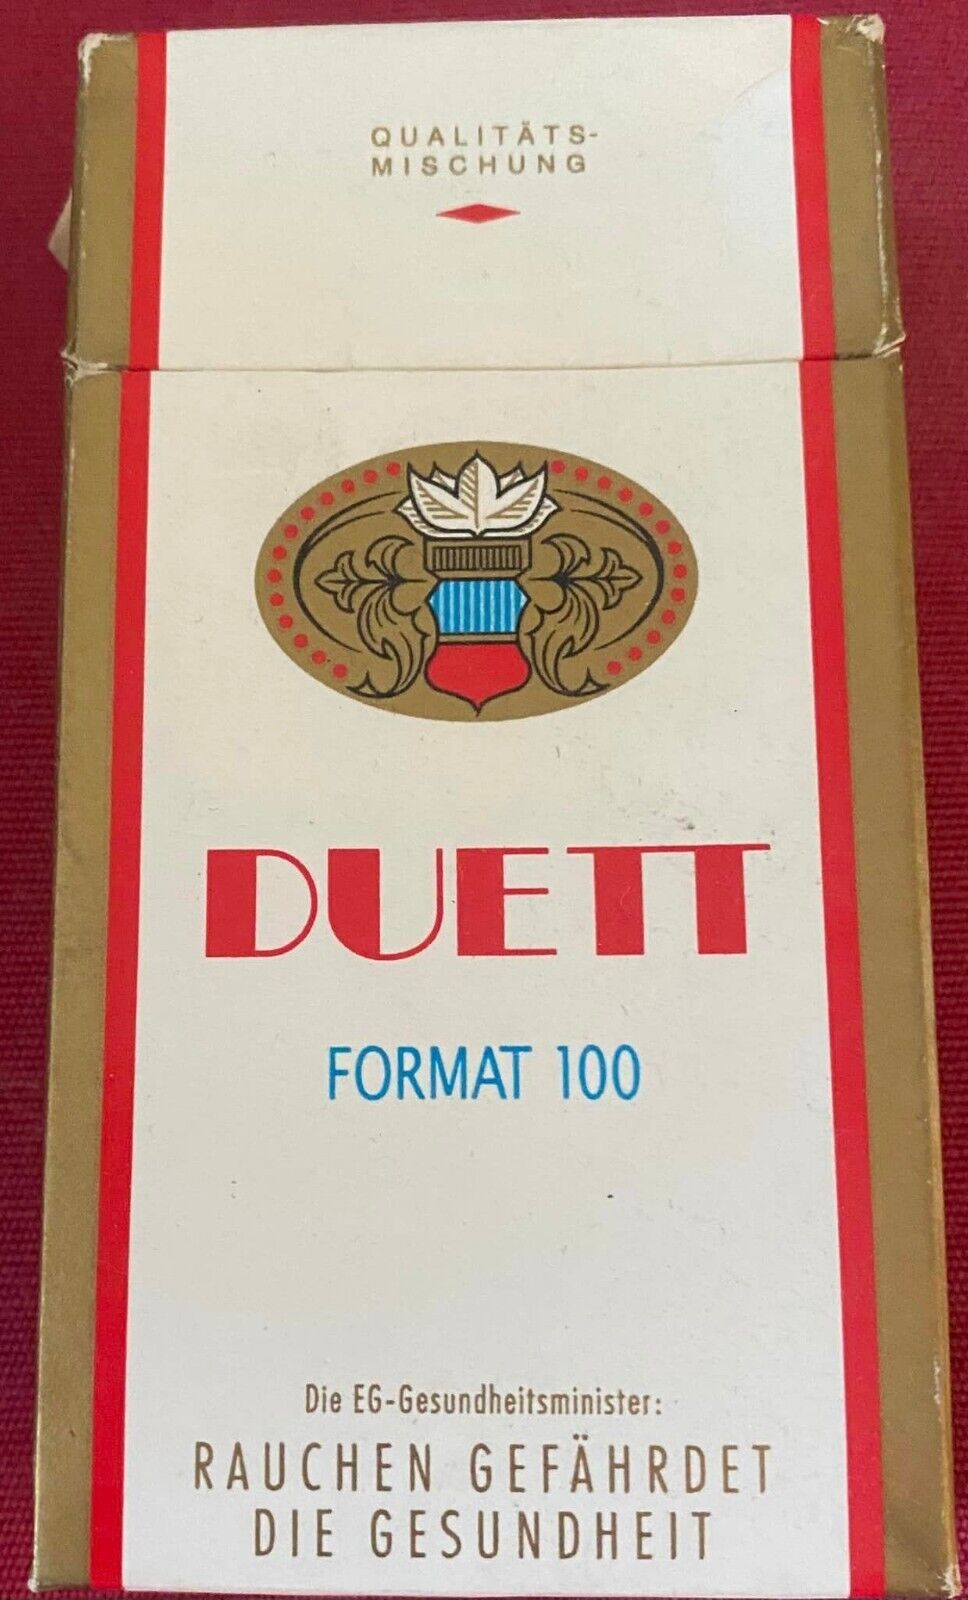 Vintage Duett Format 100 Cigarette Cigarettes Cigarette Paper Box Empty